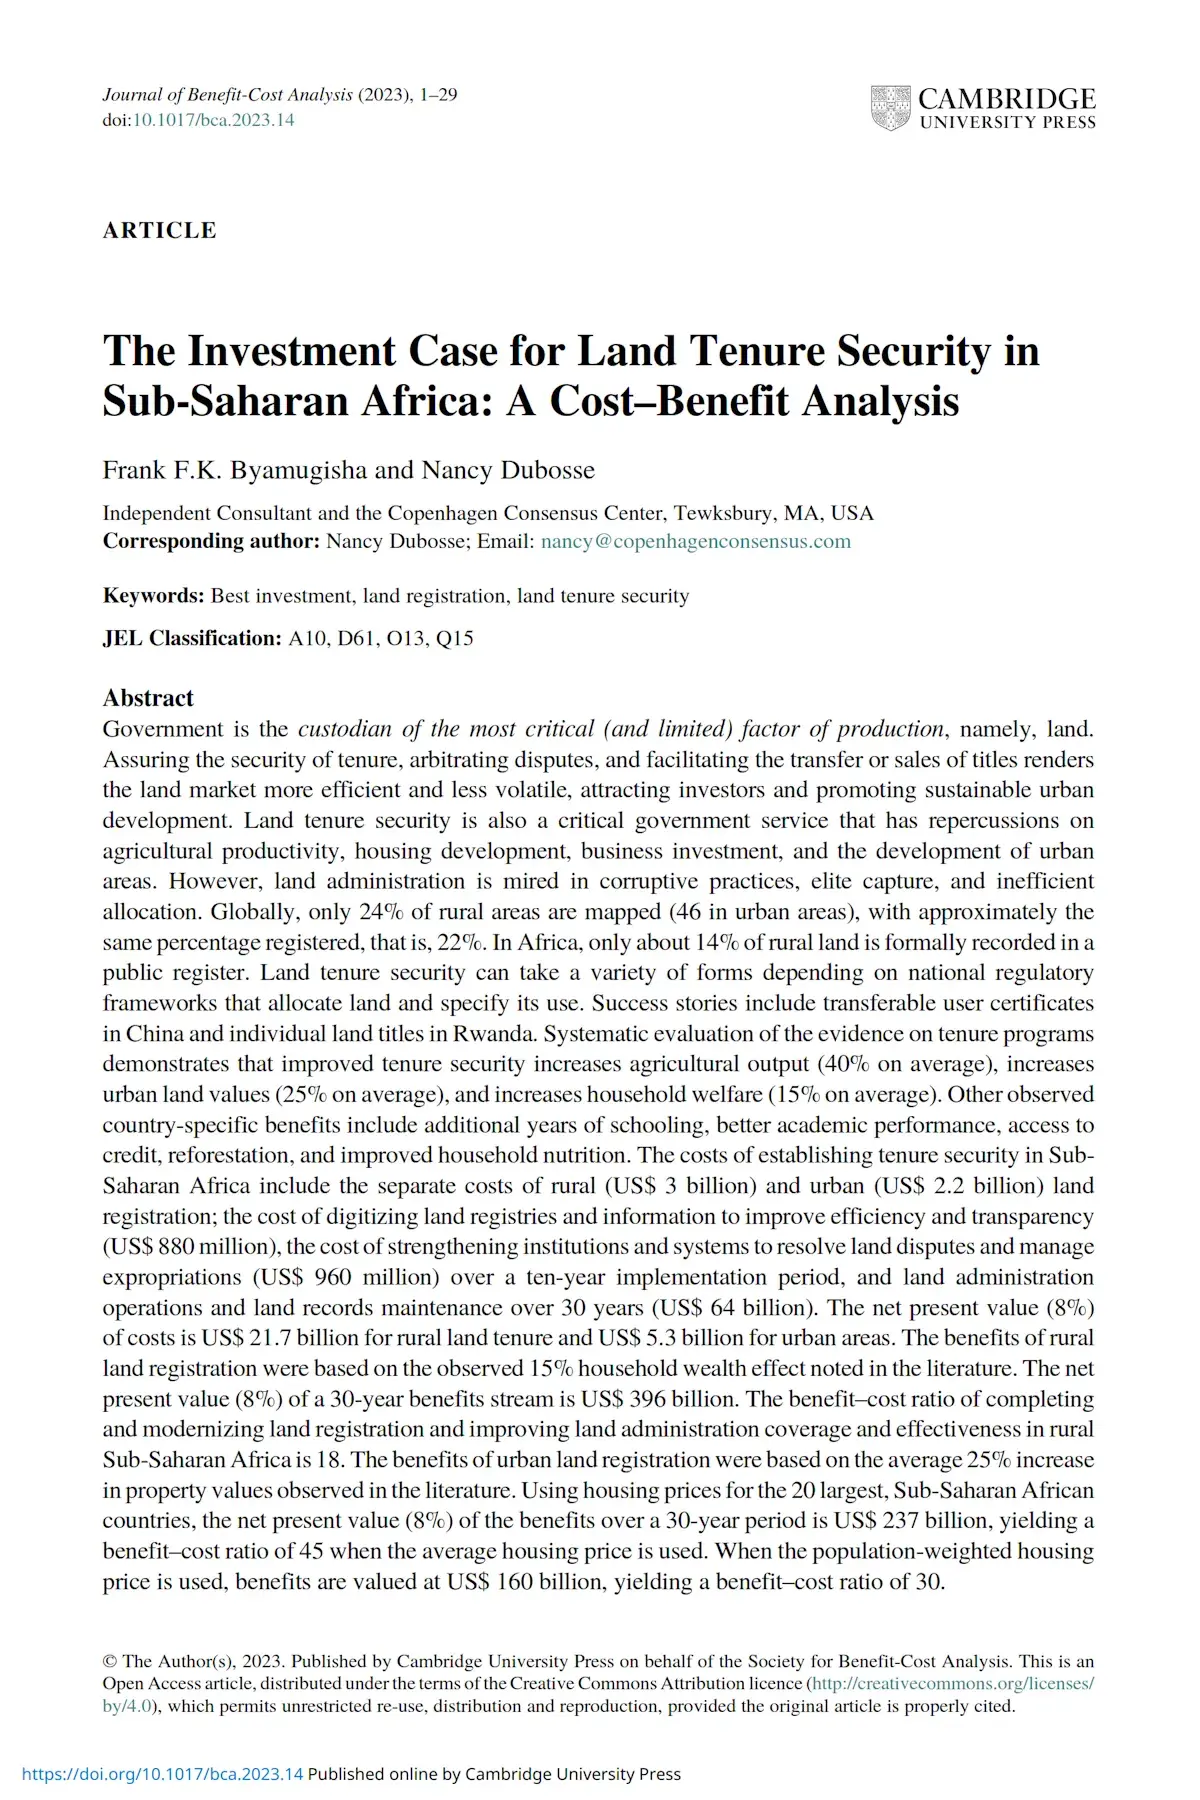 Land tenure security